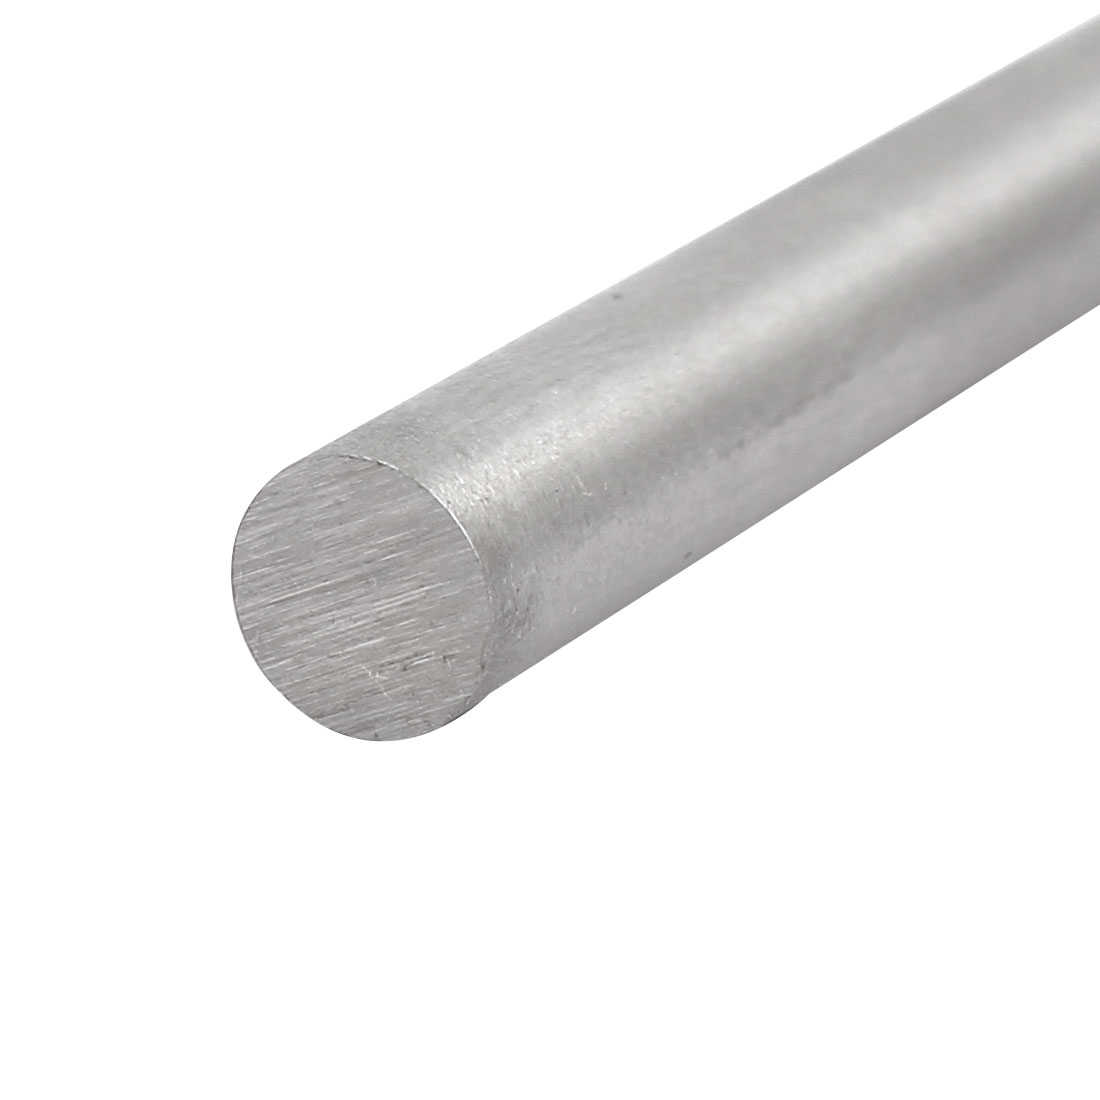 9mm Dia 200mm Length HSS Round Shaft Rod Bar Lathe Tools Gray 2pcs